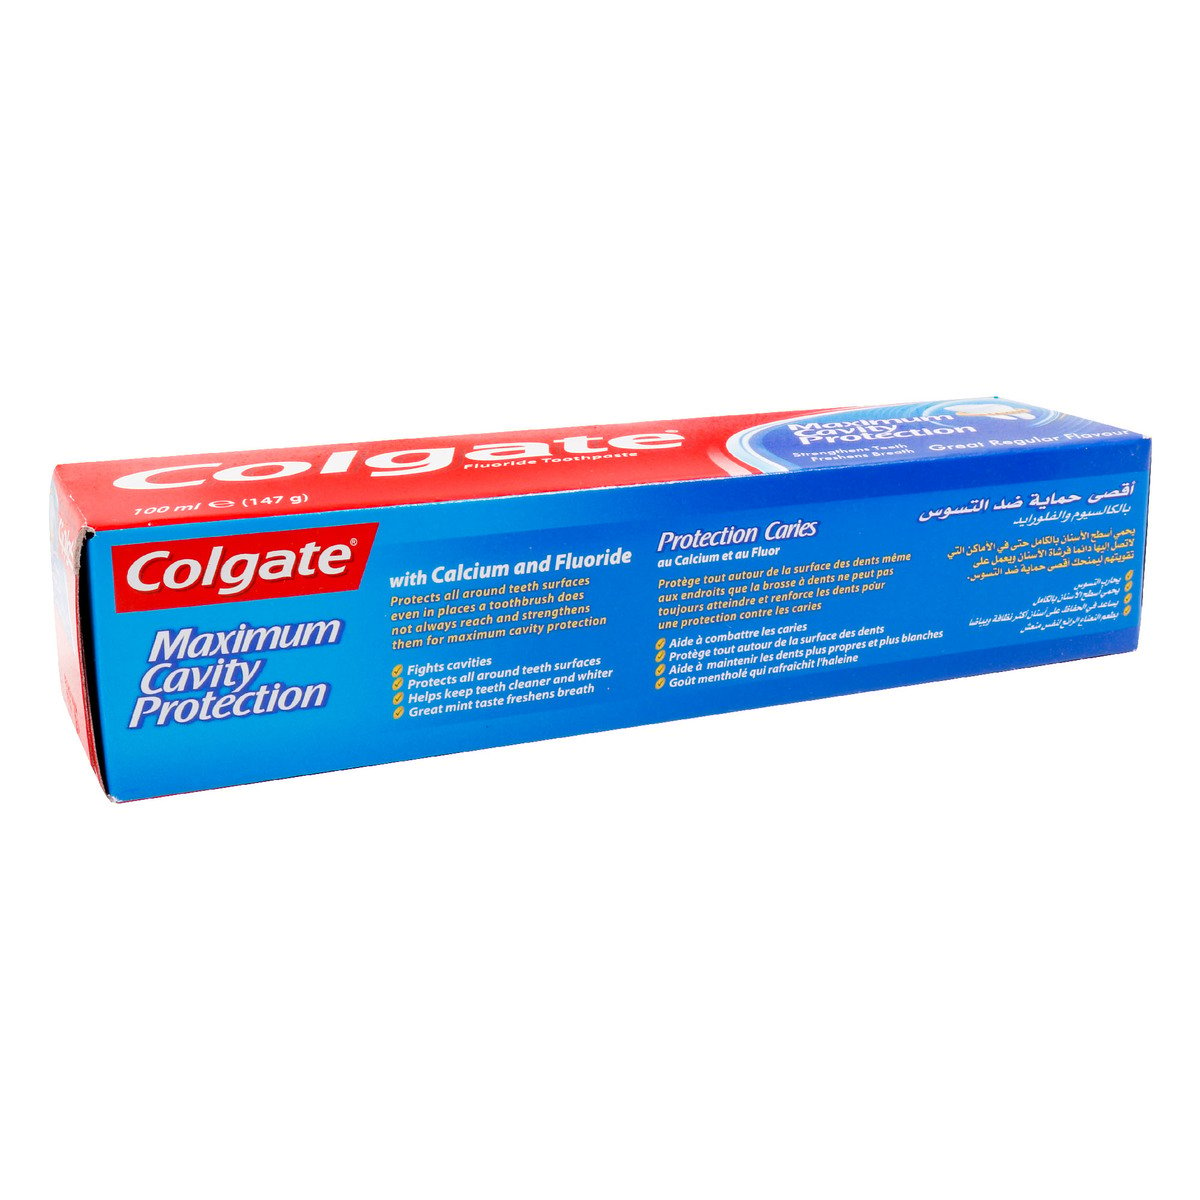 Colgate Toothpaste Maximum Cavity Protection Regular 100 ml